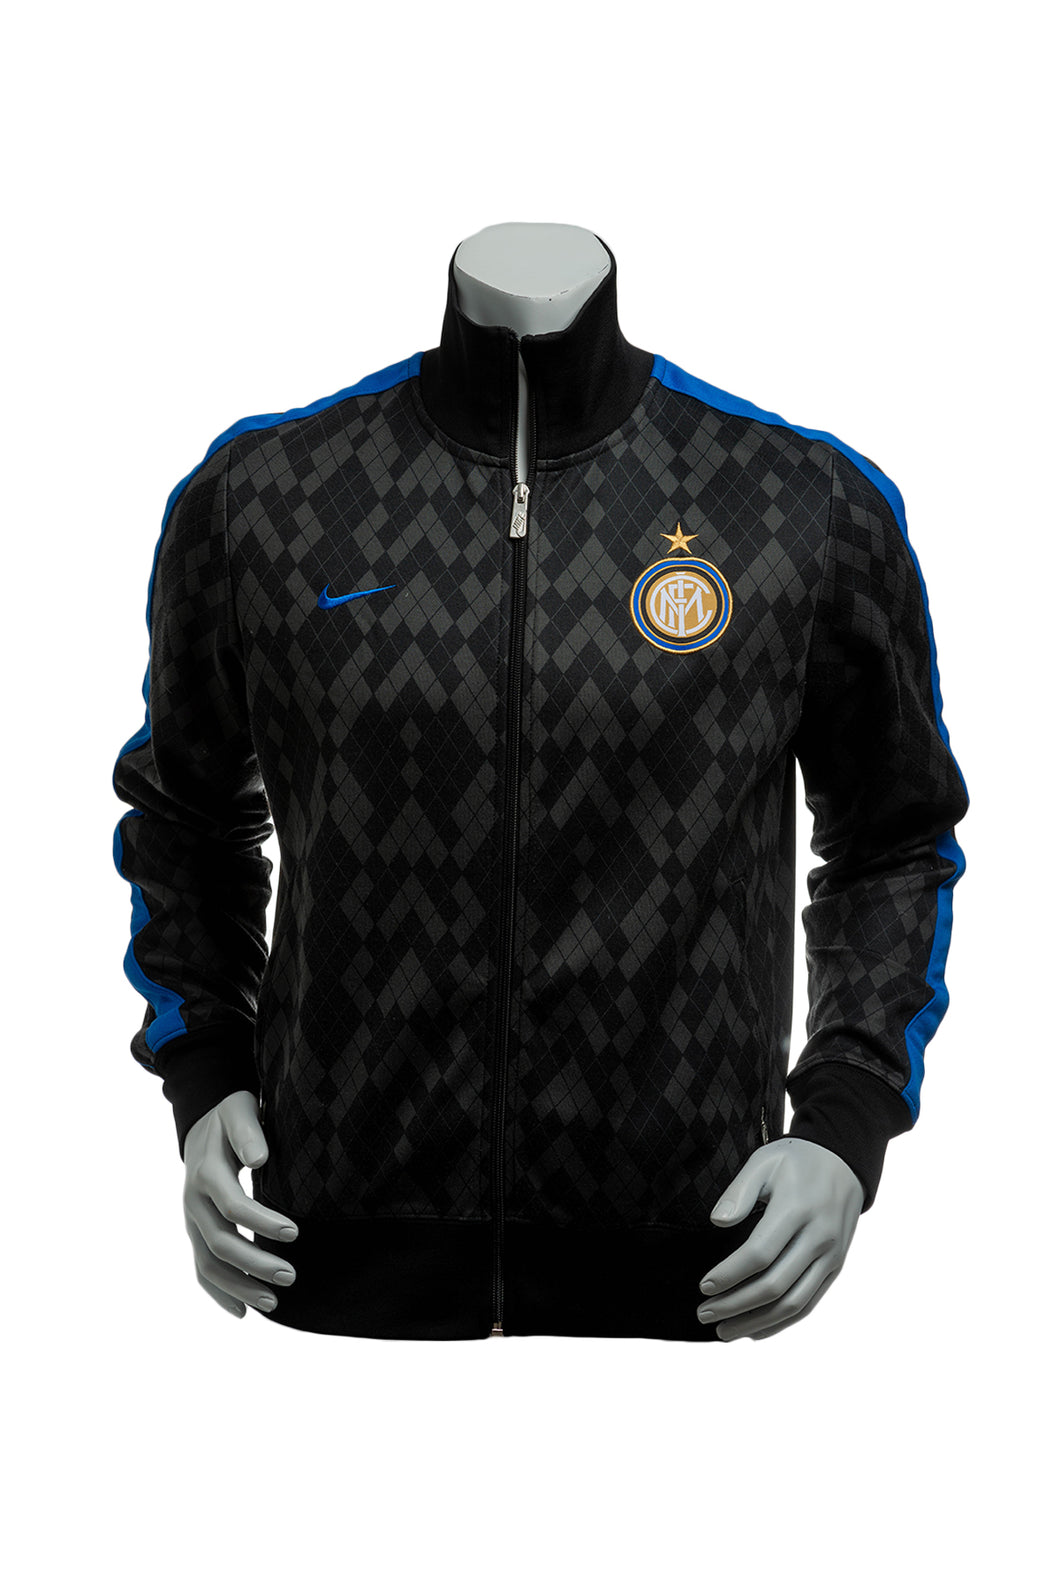 Nike UEFA Inter Milan Football Club Track Jacket Men's Medium